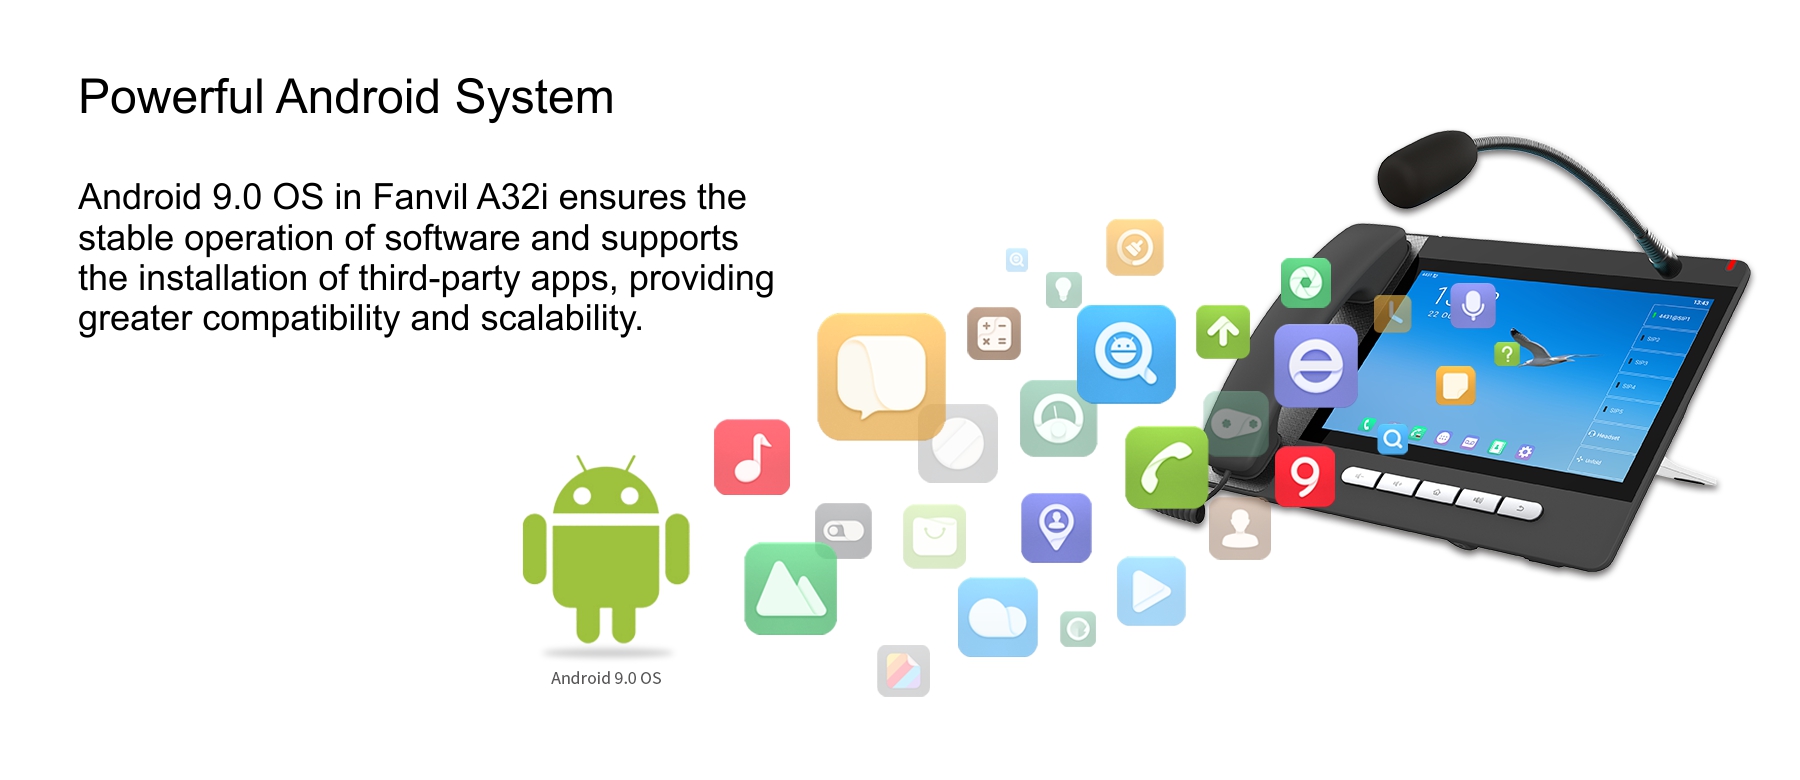 Fanvil A32i Android 9.0 OS